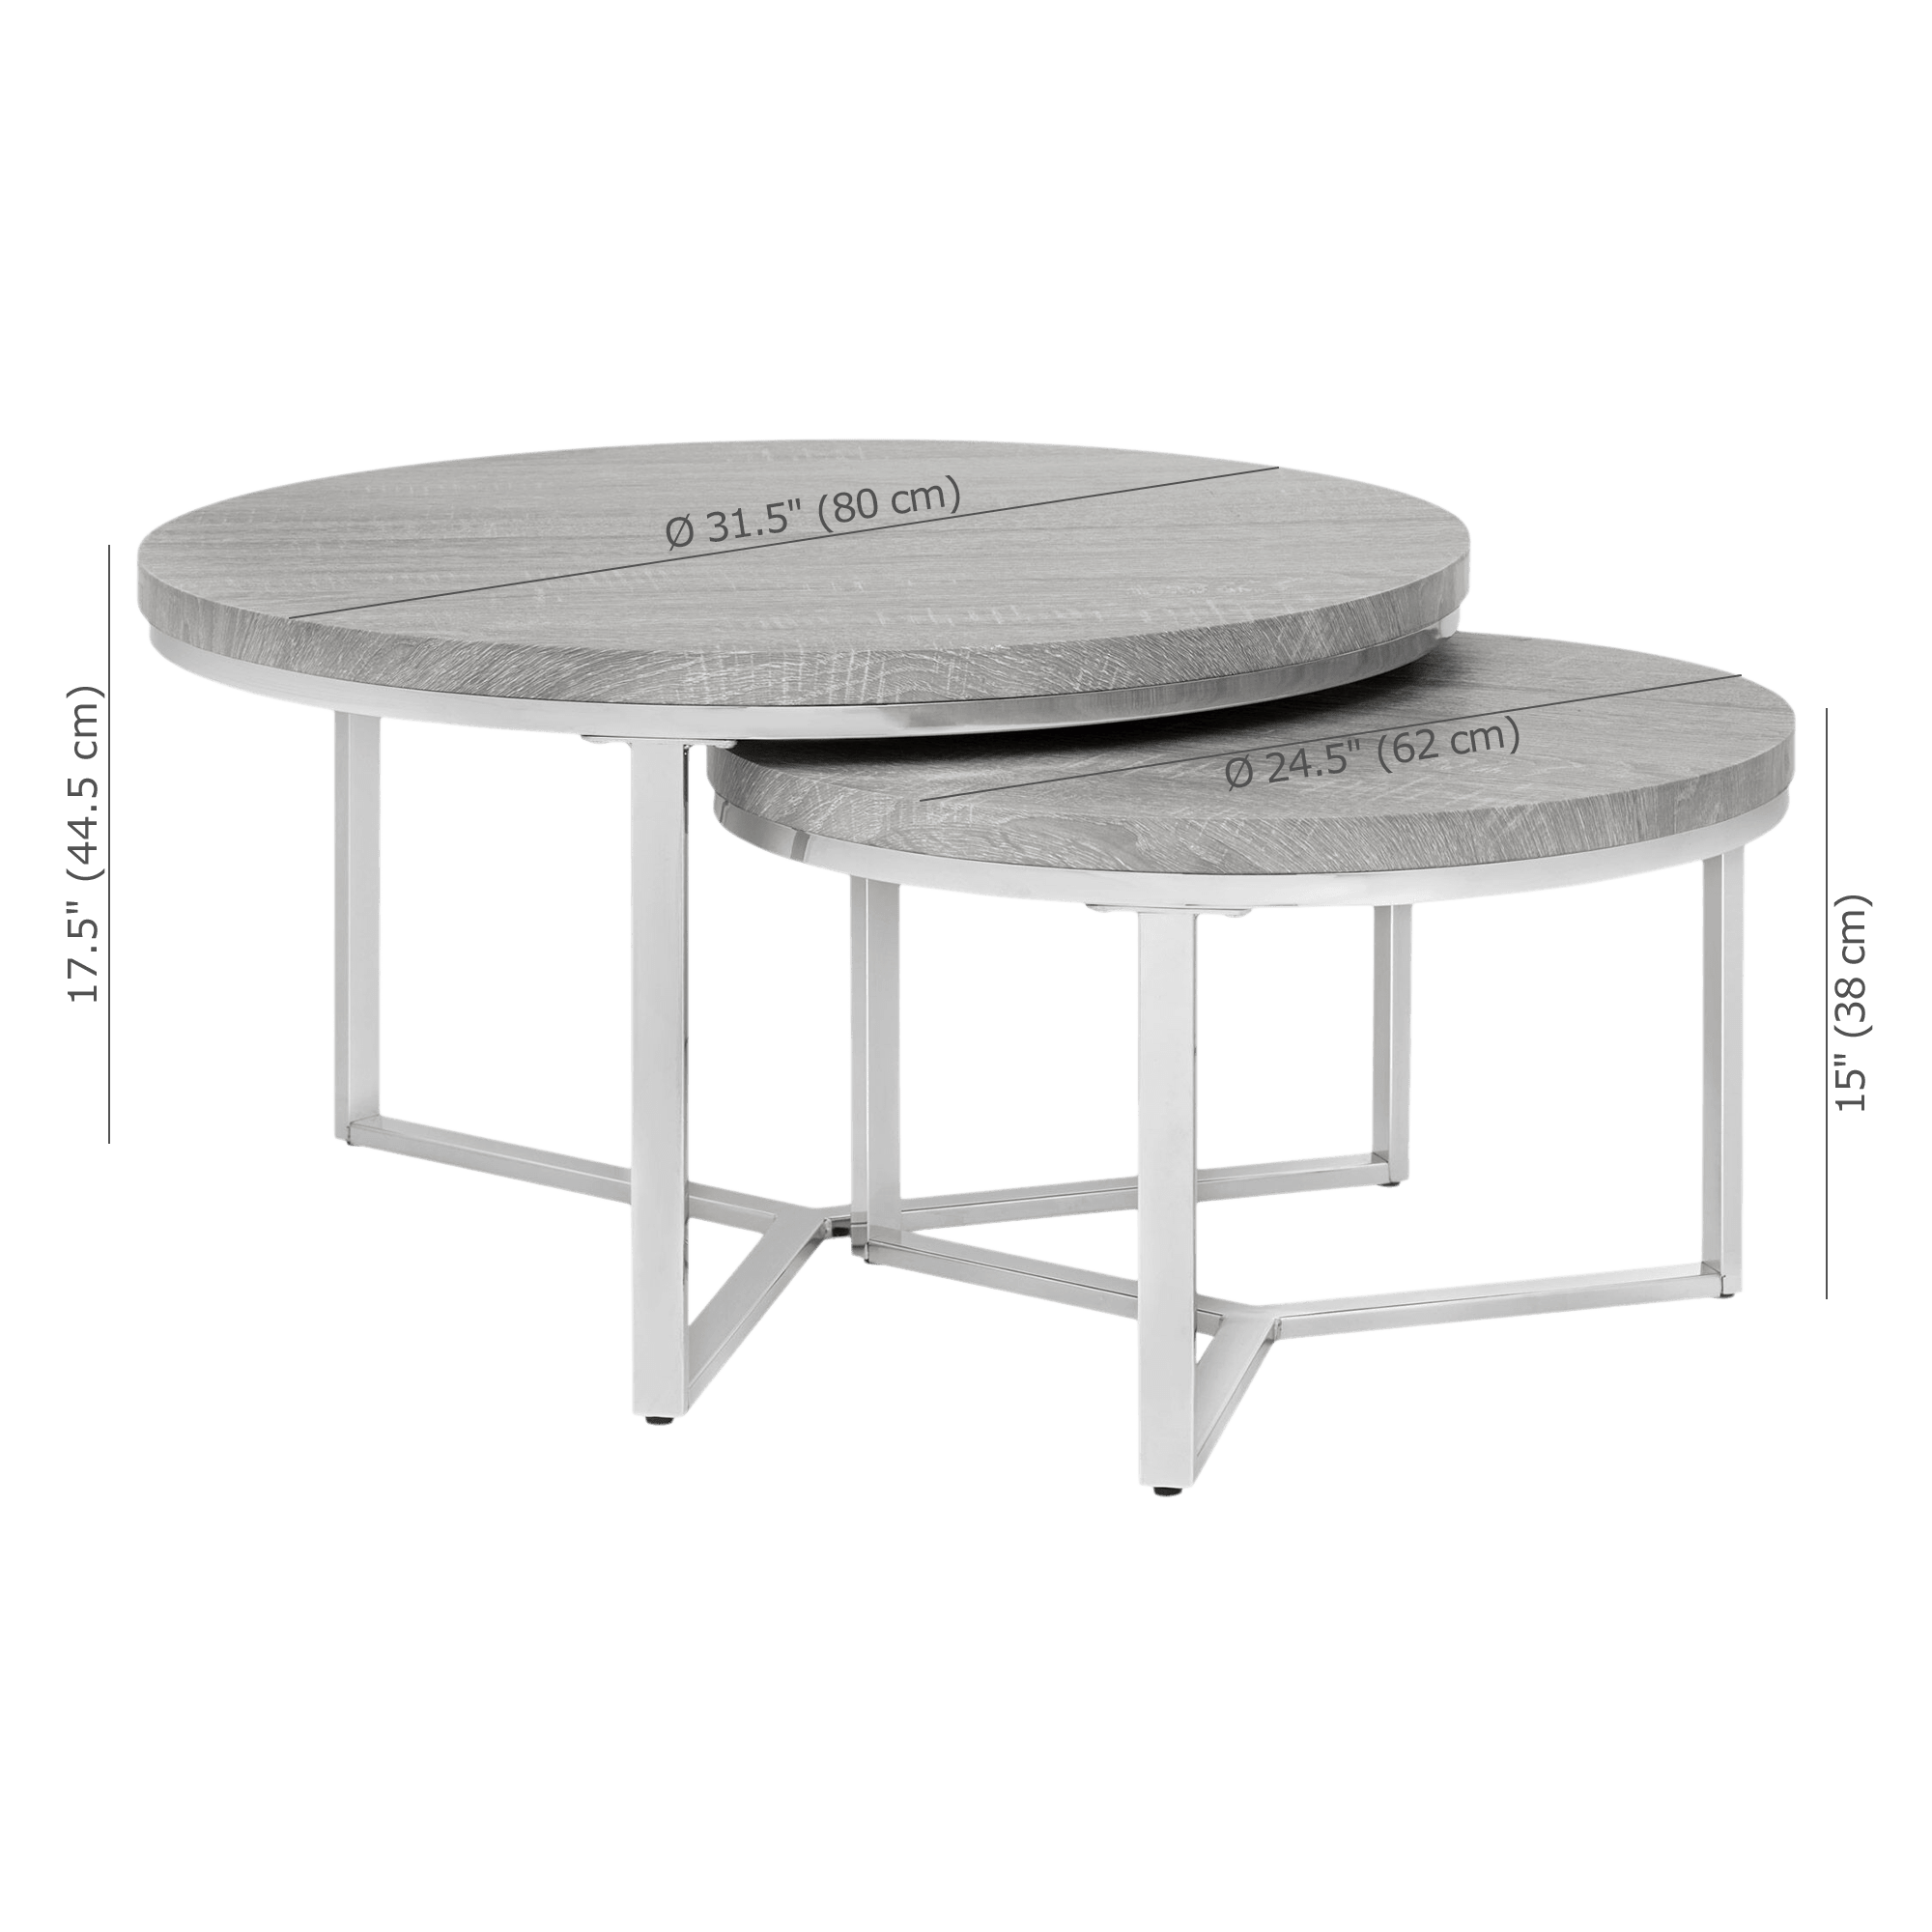 Set of 2 Veneer Coffee Tables with Chrome Legs